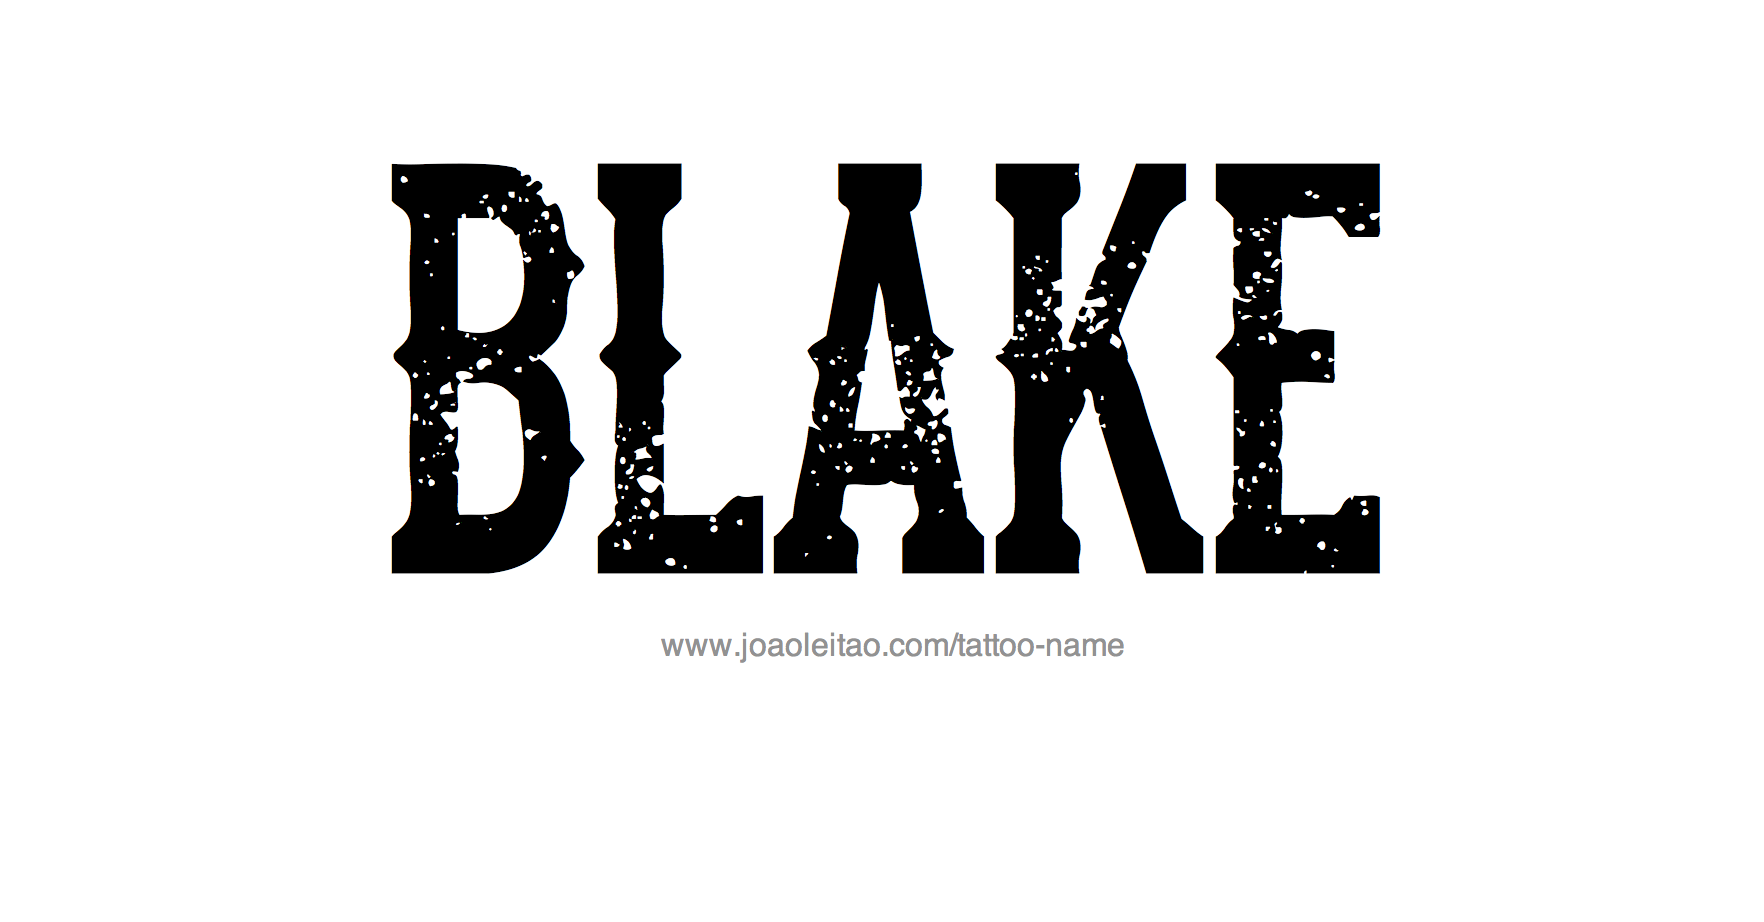 Tattoo Design Name Blake